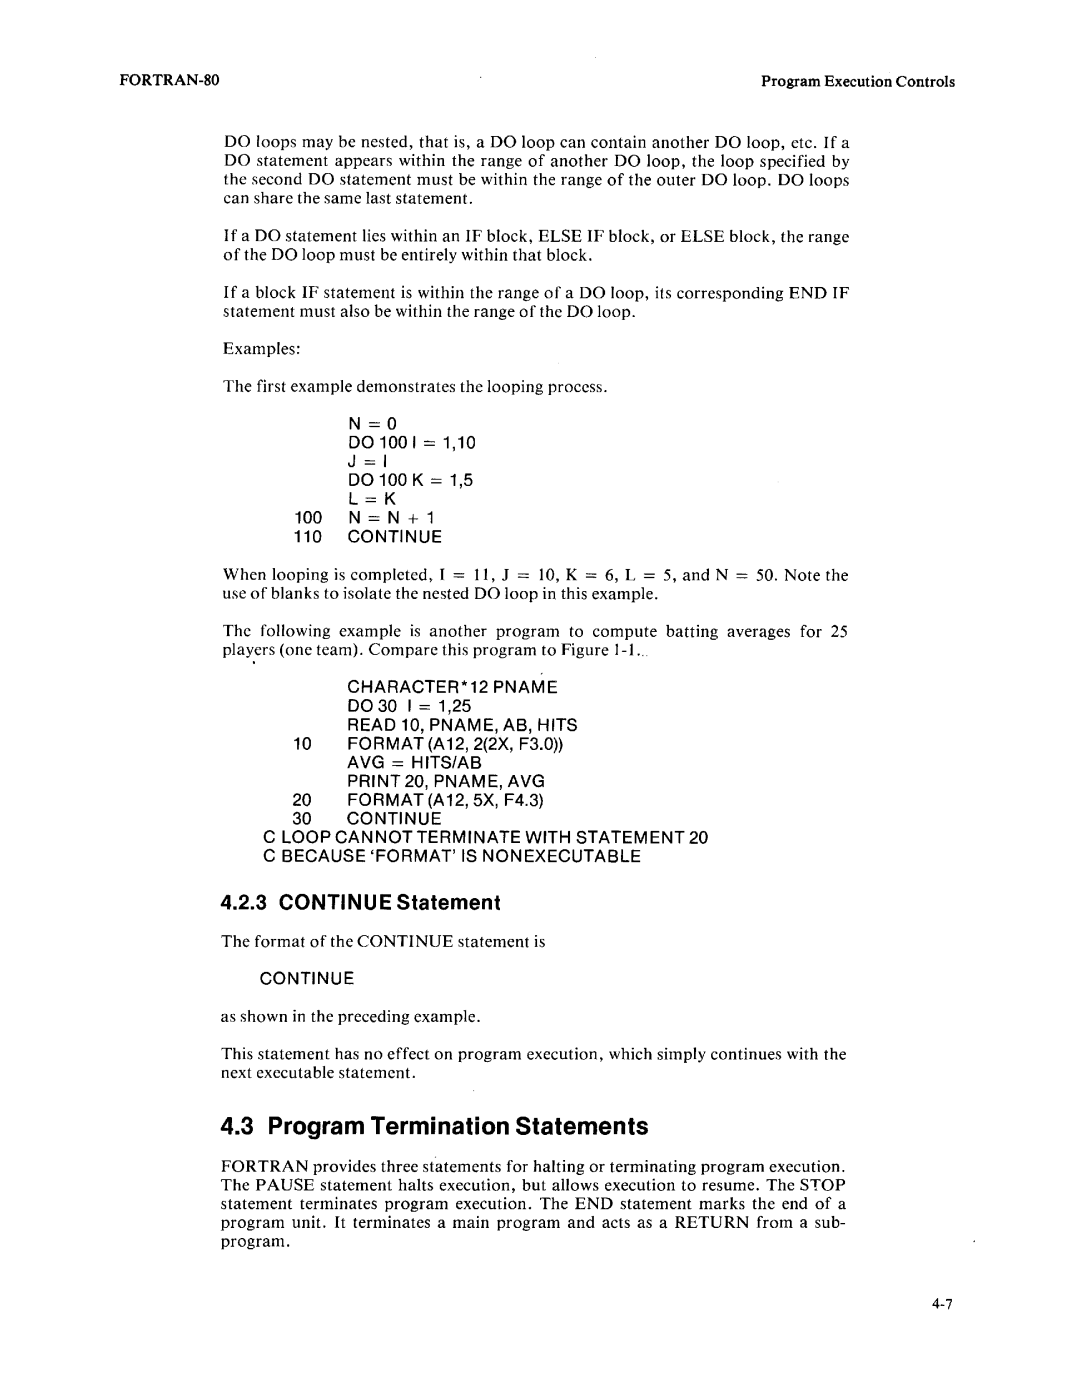 Intel fortran-80 manual Program Termination Statements, 4.2.3CONTINUE Statement 